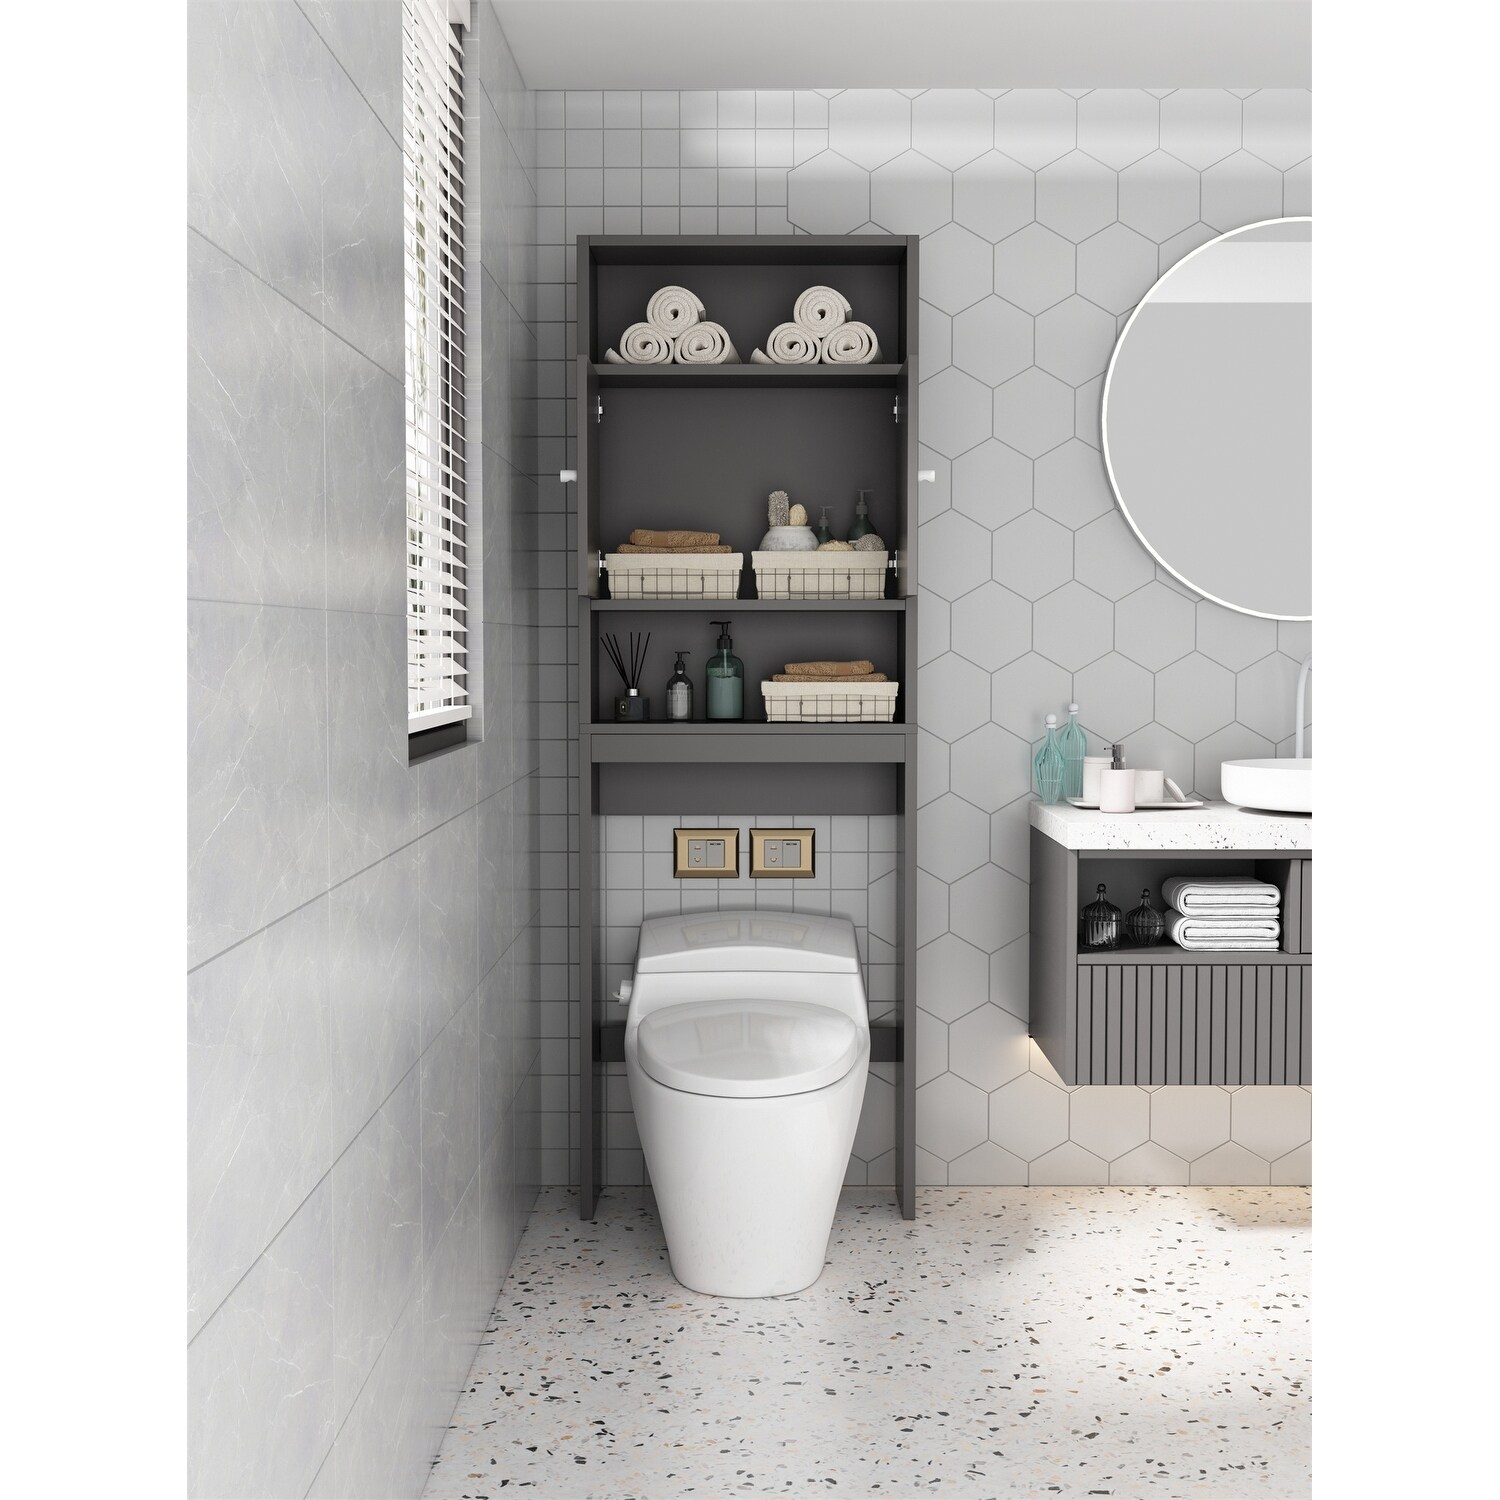 Bathroom Shelf Accent Cabinet Toilet Standing Cabinet with 2 Door, Gap Storage Rack Side Storage Organizer Paper Holder - Gray